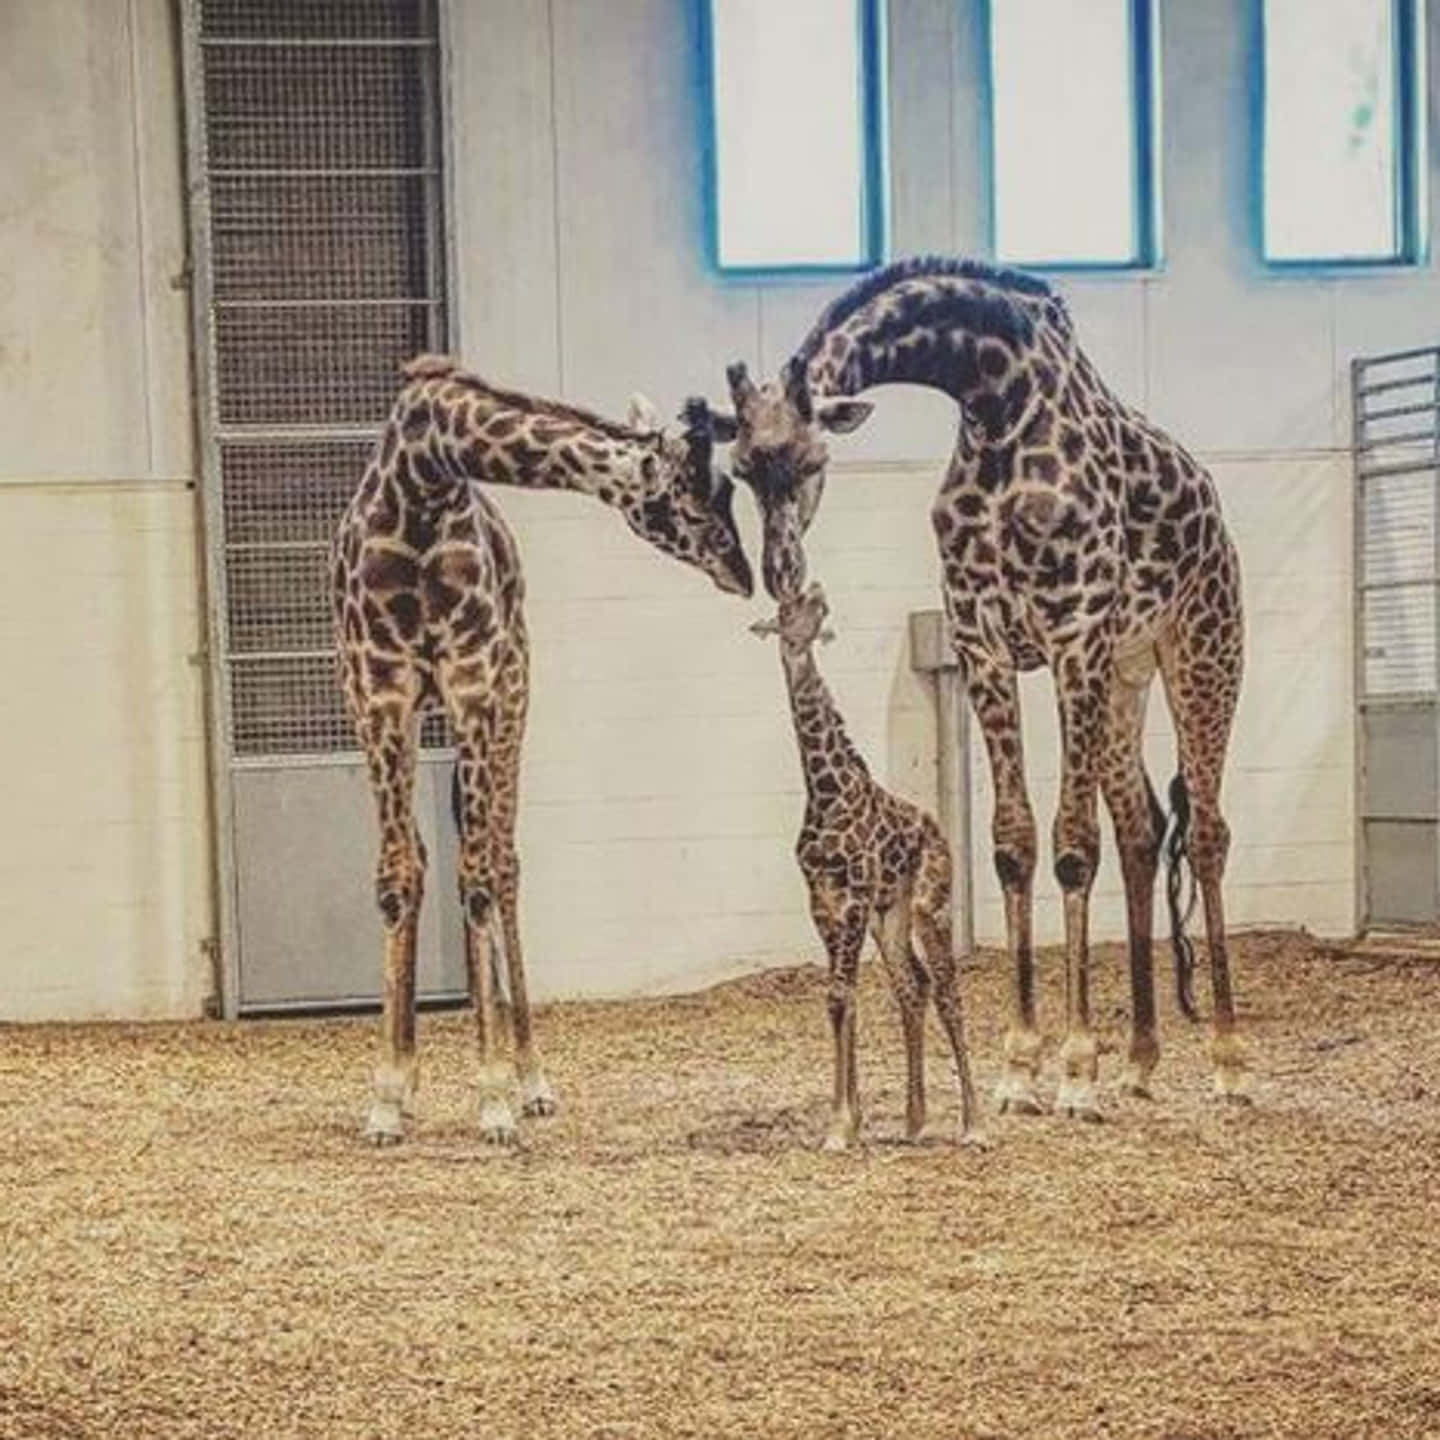 Admiration ❤️ | Adorable baby giraffe